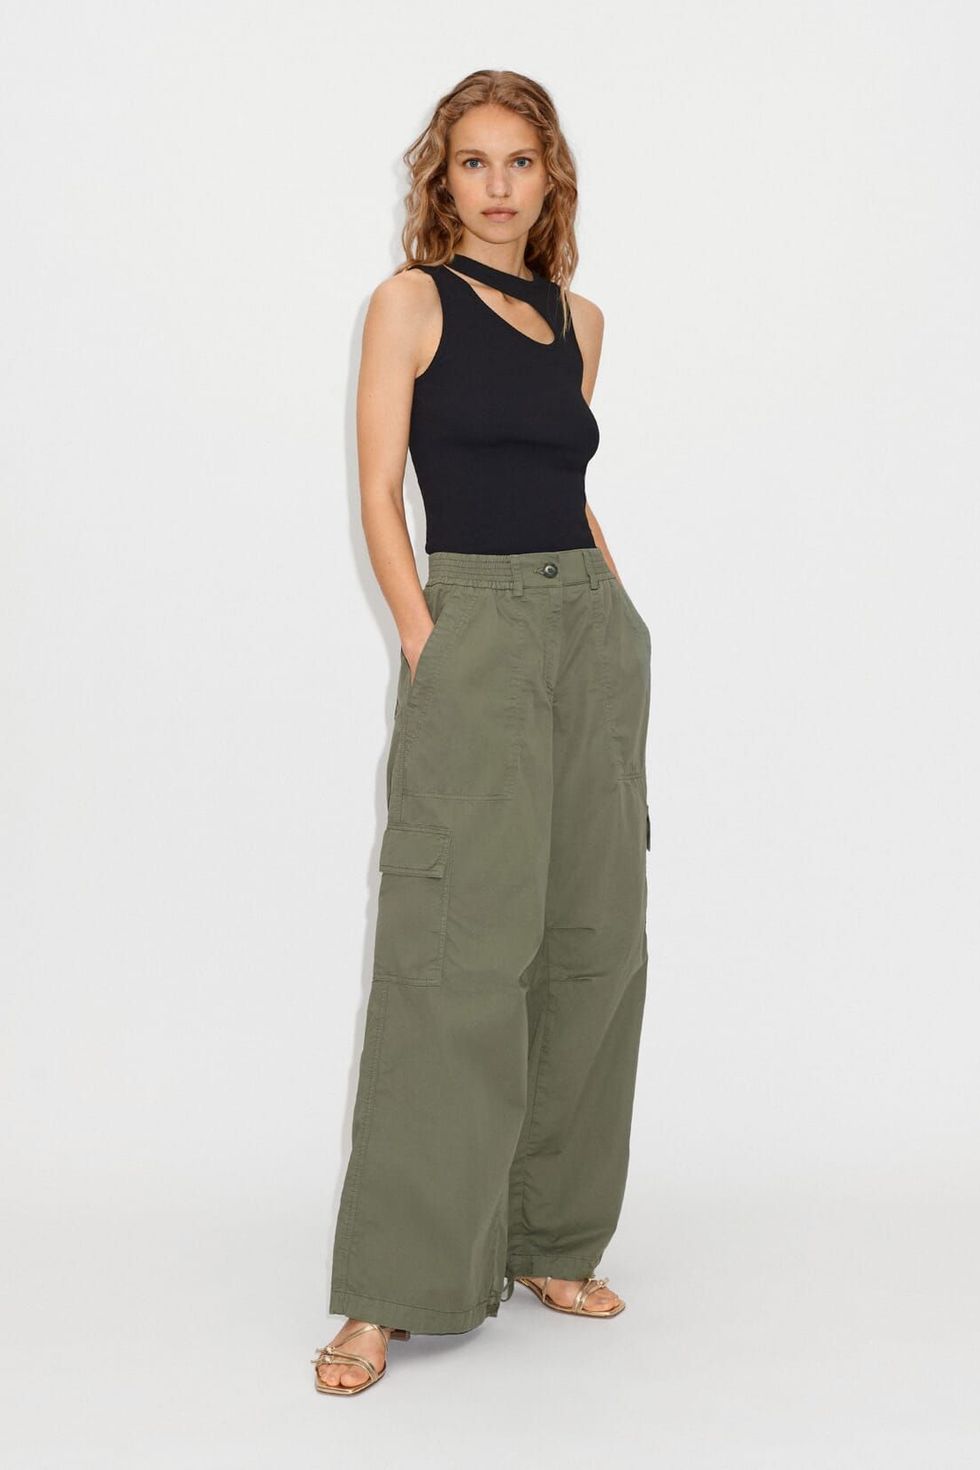 IEPOFG Cargo Pants for Women 2024 Cute Shaped Slim Fit Pants